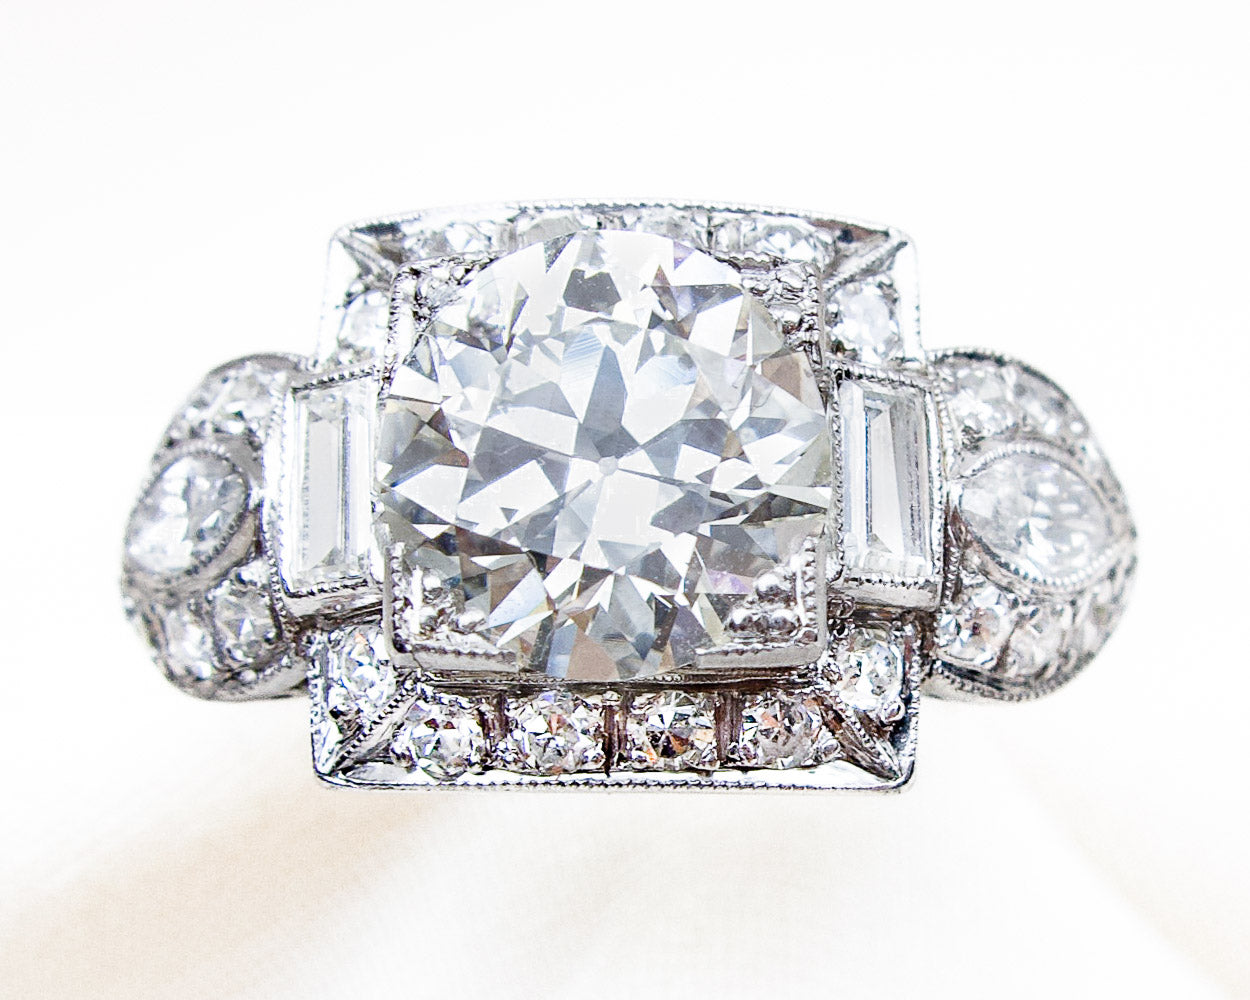 Buy Art Deco Engagement Ring, Baguette Cut Diamond Ring, Simple Wedding Ring,  Modern Vintage Ring Online in India - Etsy